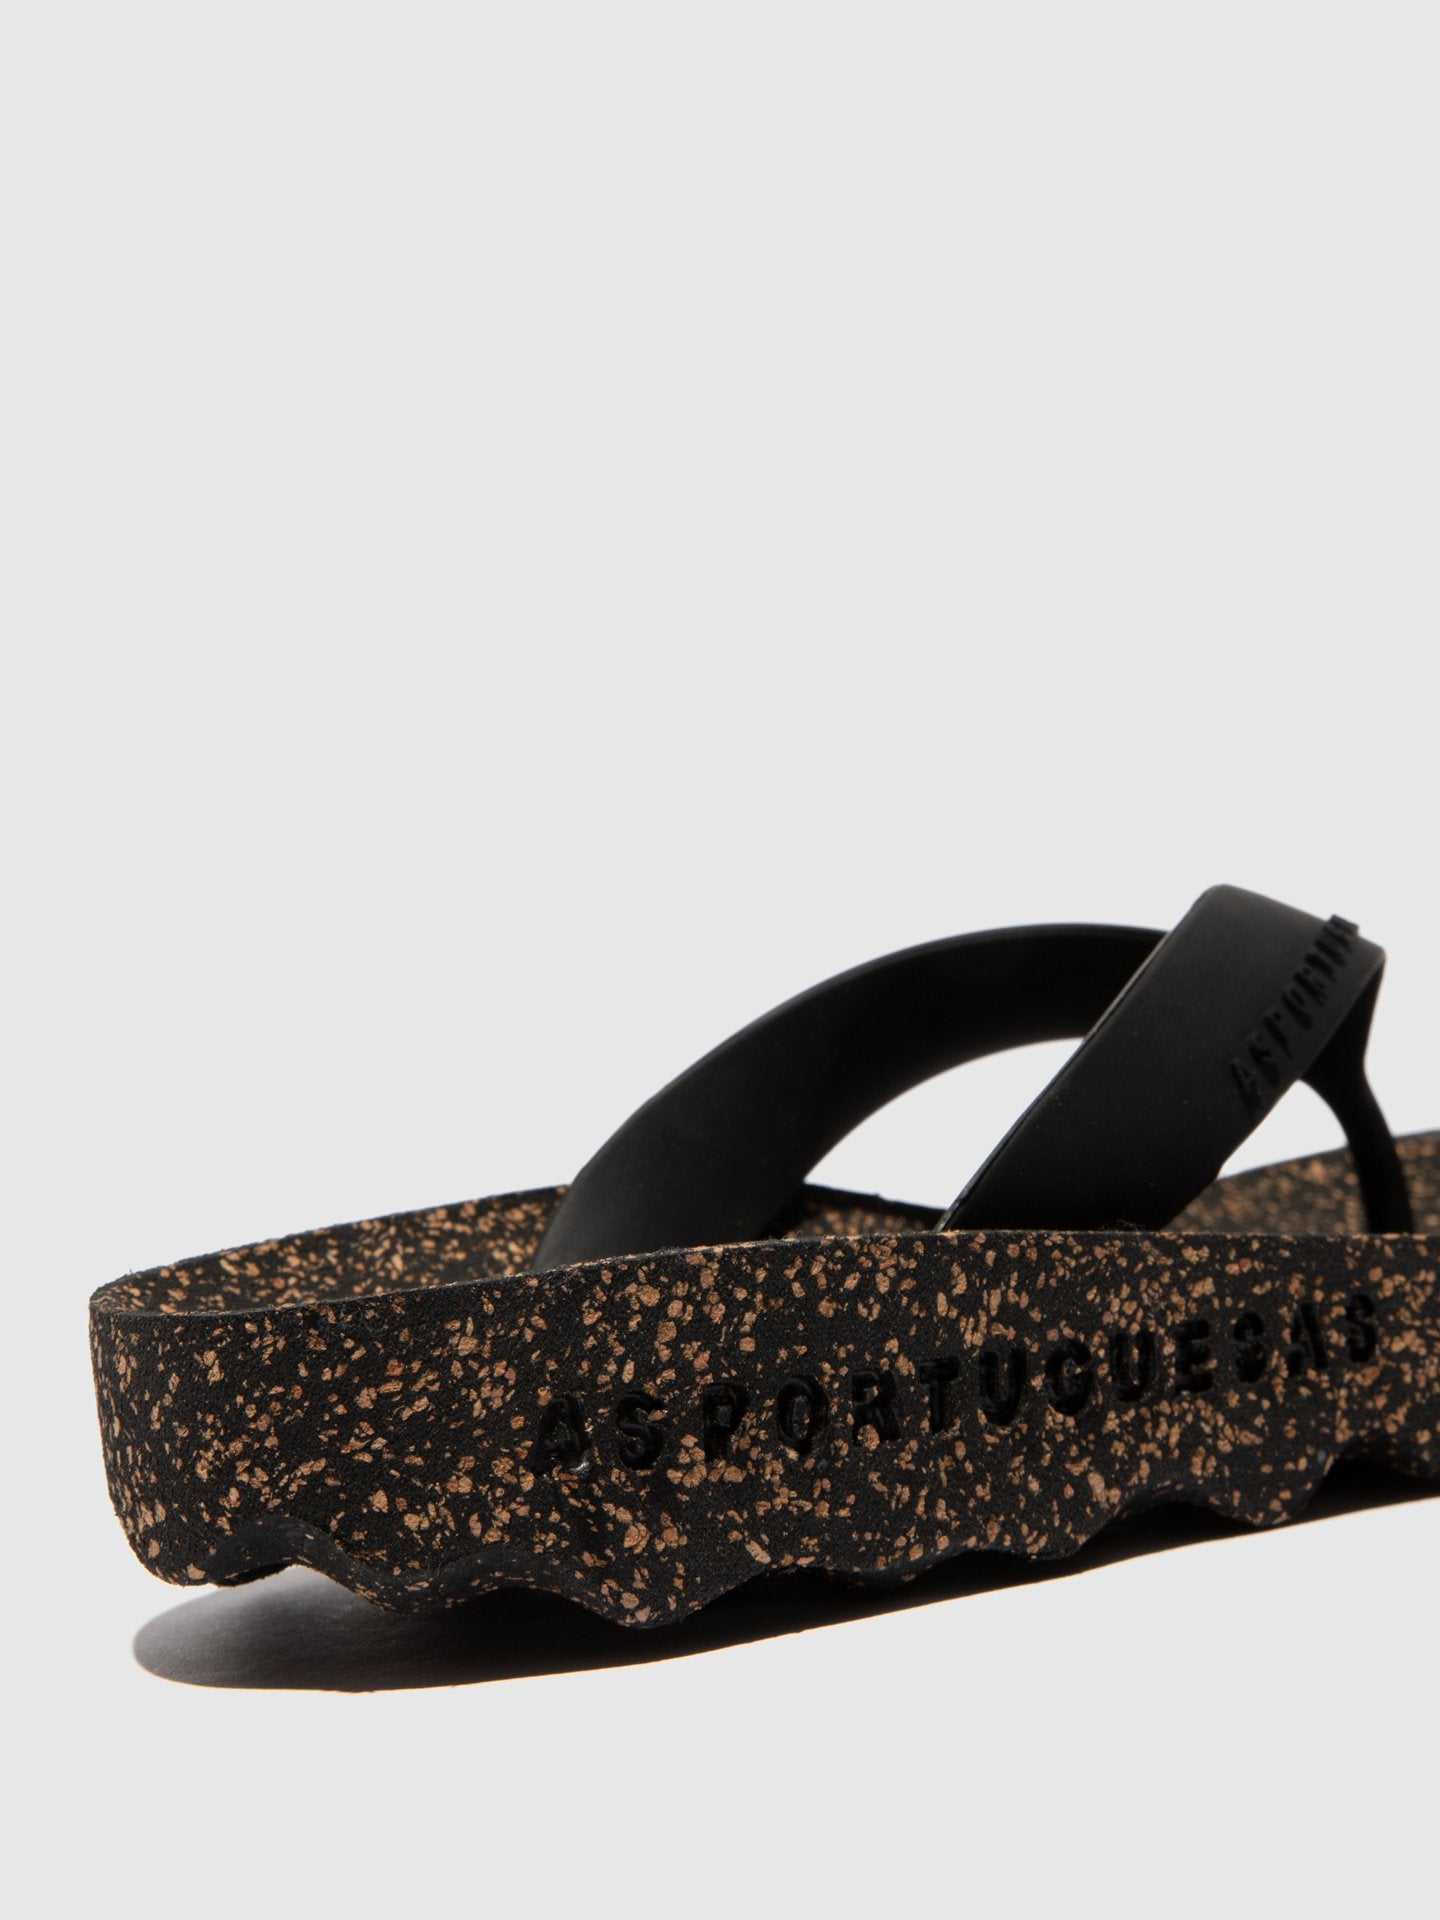 Asportuguesas "FEEL" Black flip flop sandal